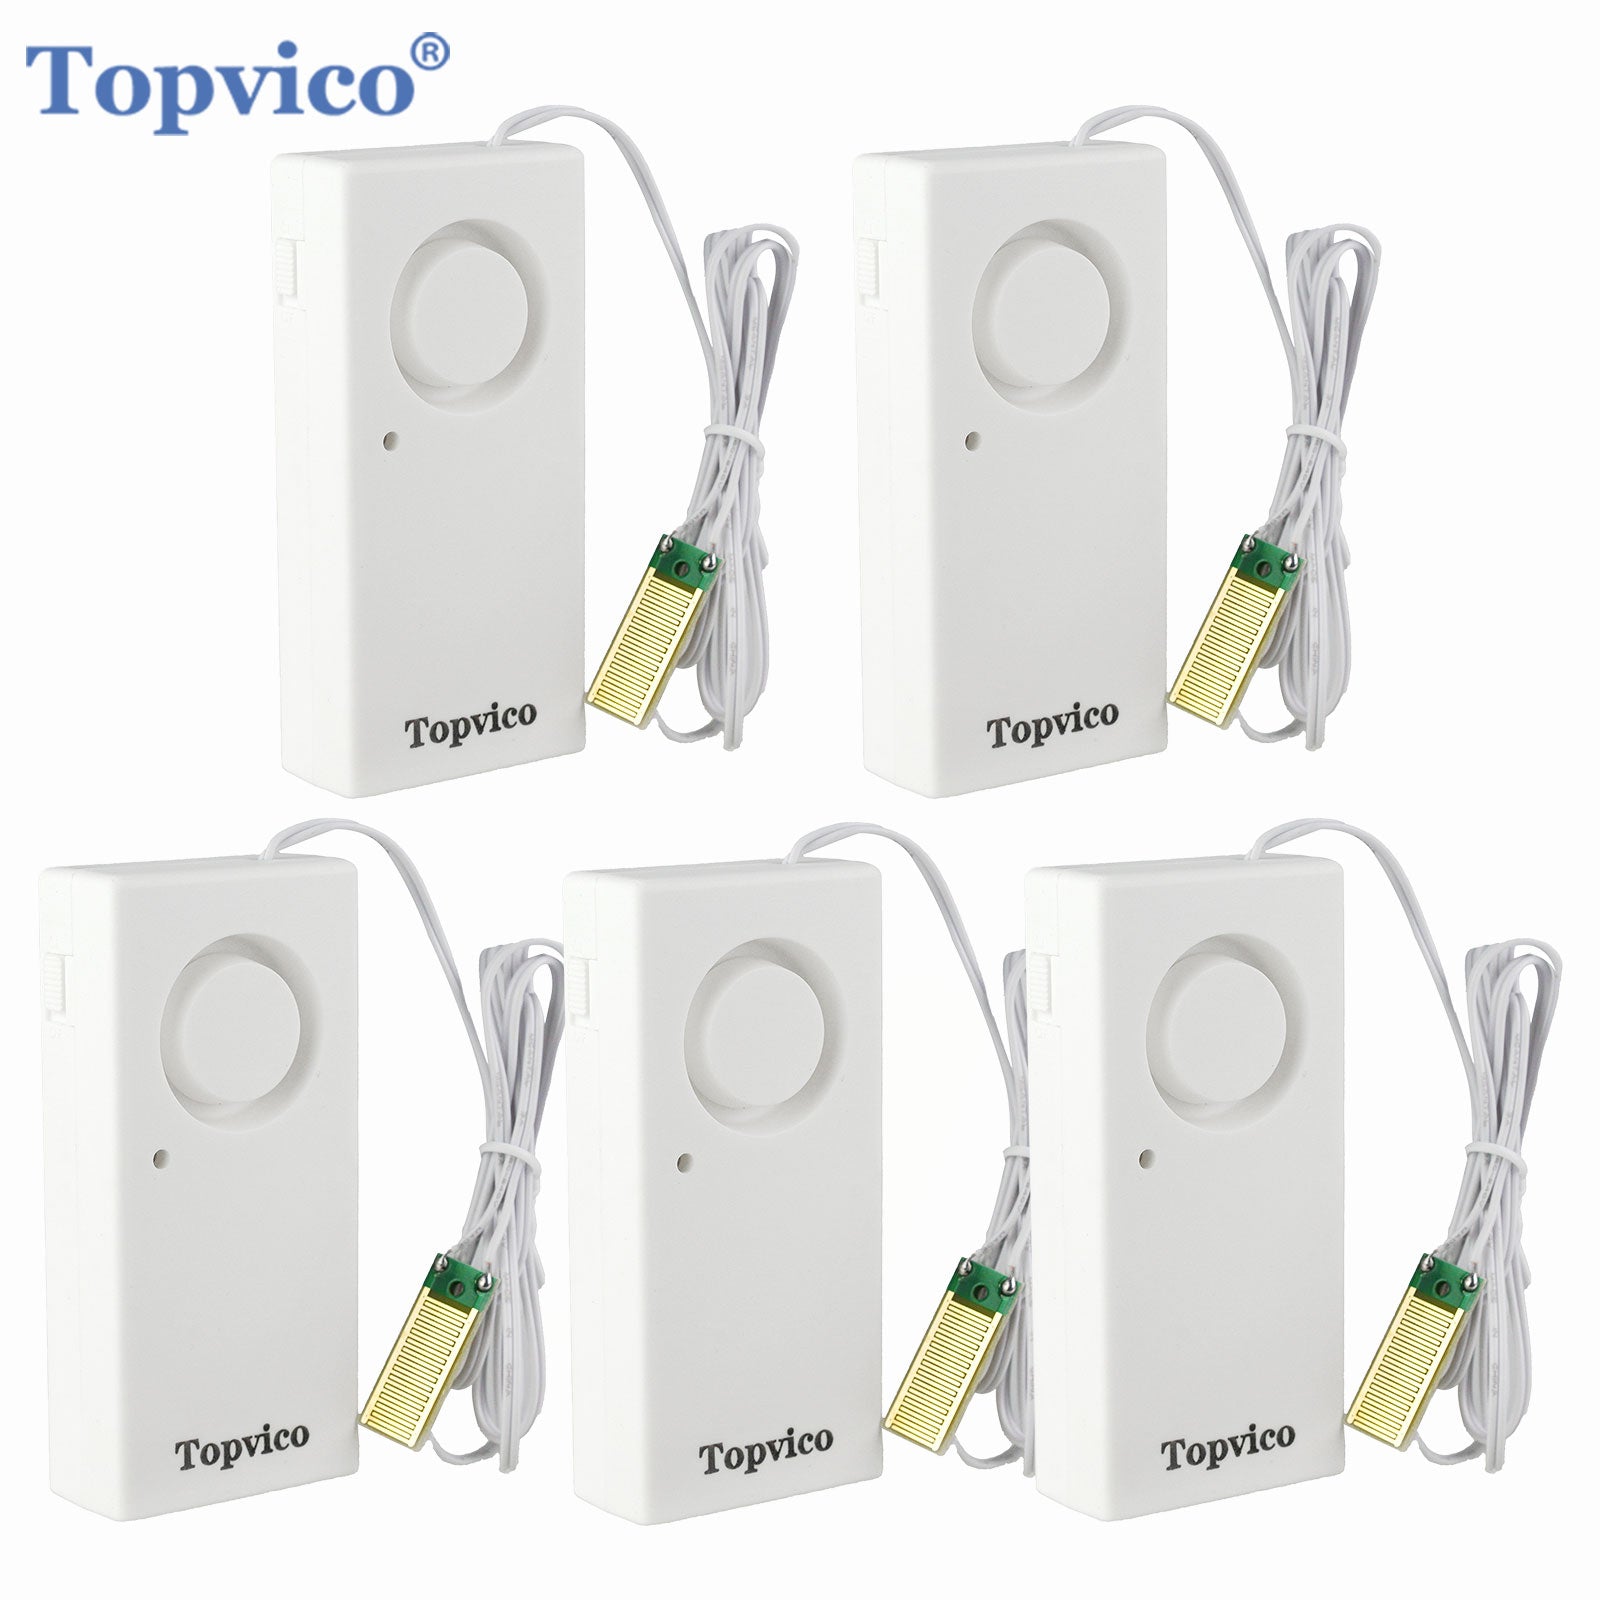 Topvico 1 / 3 / 5pcs Water Leakage Sensor Detector Water Leak Alarm Flood Detection 120dB Alert Wireless Home Security Alarm System